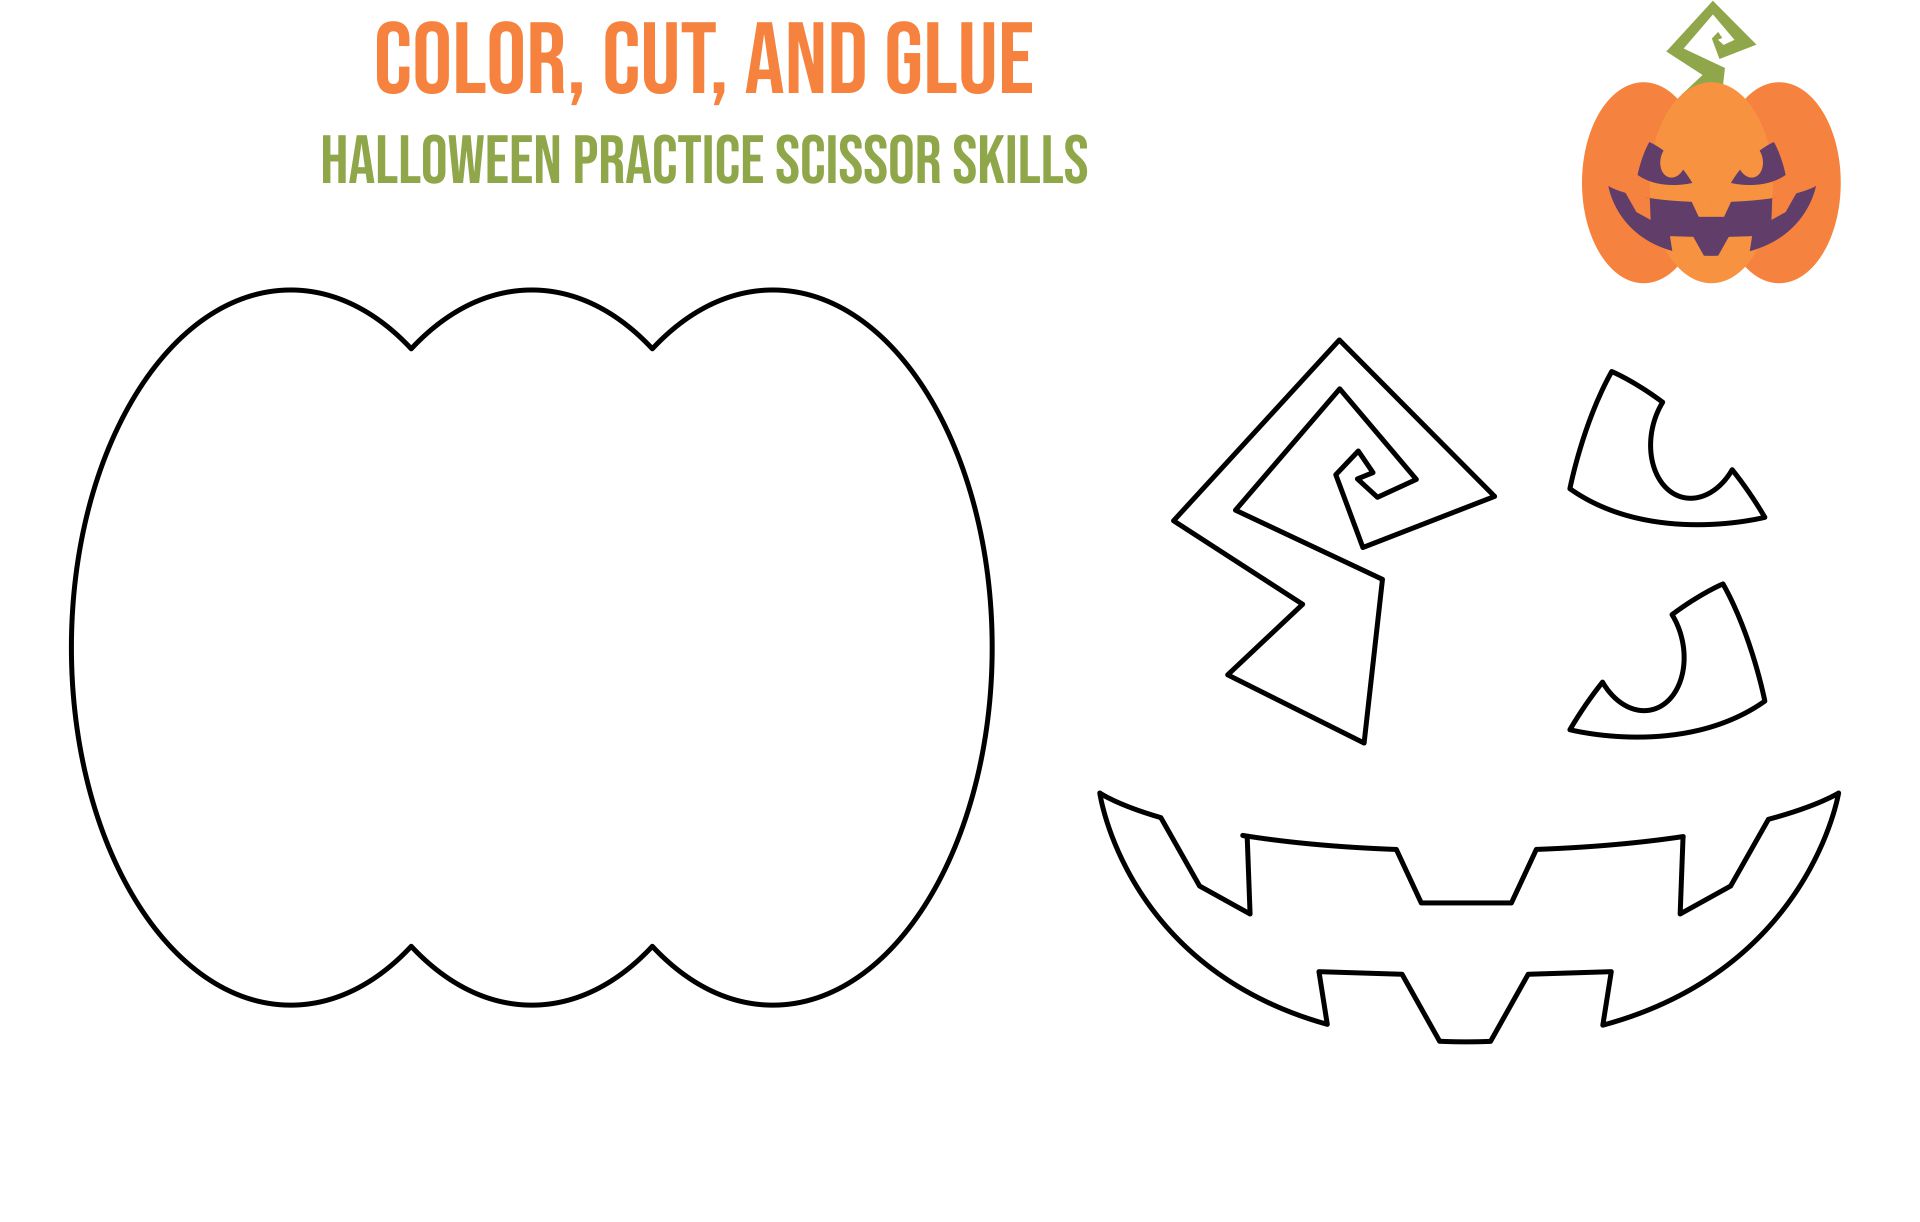 Color Cut Glue Halloween Practice Scissor Skills Printable Template